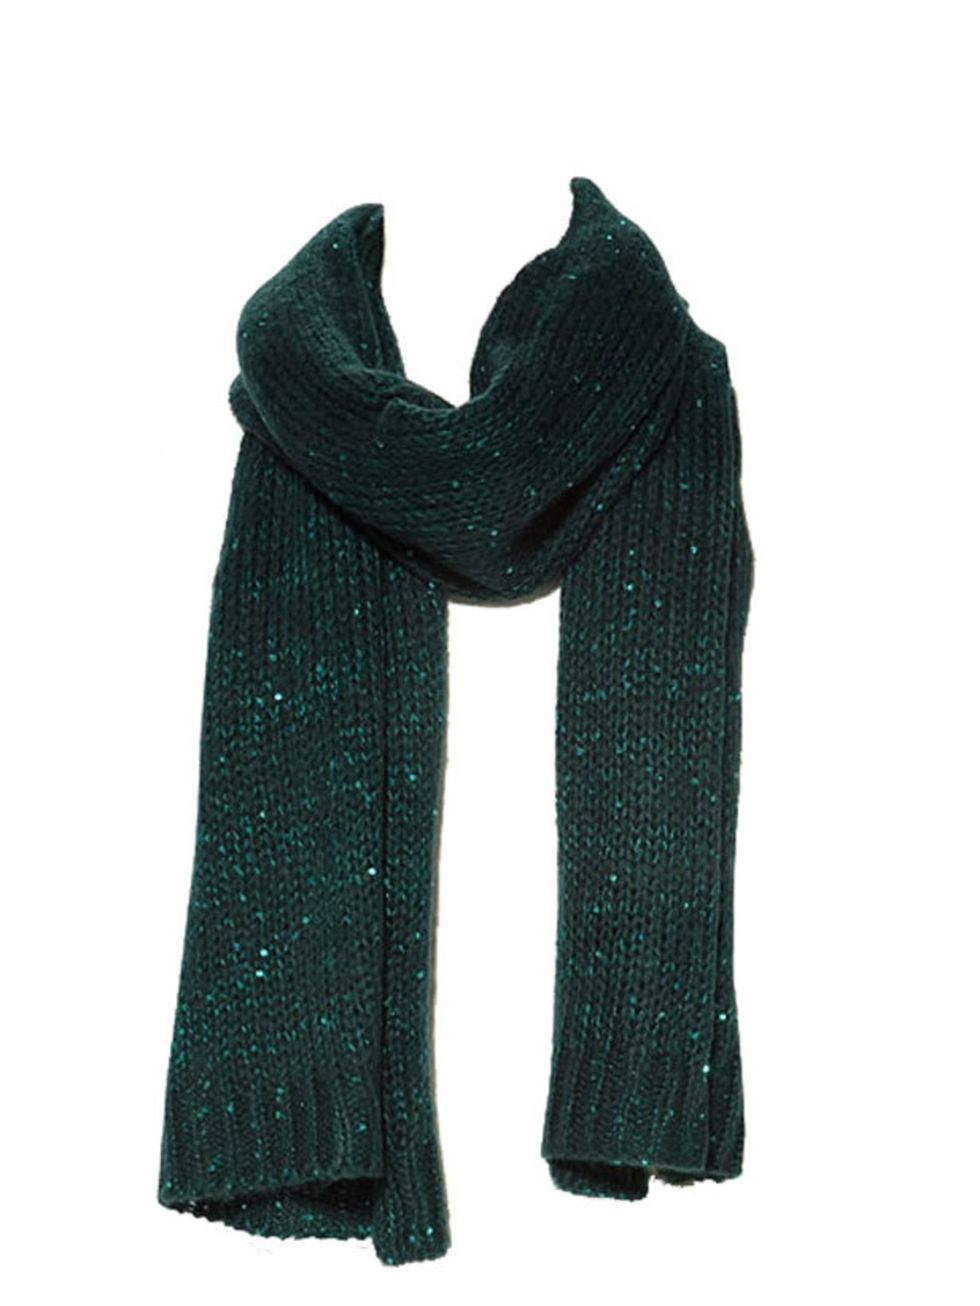 <p><a href="http://www.zara.com/webapp/wcs/stores/servlet/product/uk/en/zara-W2011/131508/440508/SEQUINNED%2BKNIT%2BSCARF">Zara</a> green sequin scarf, £19.99</p>